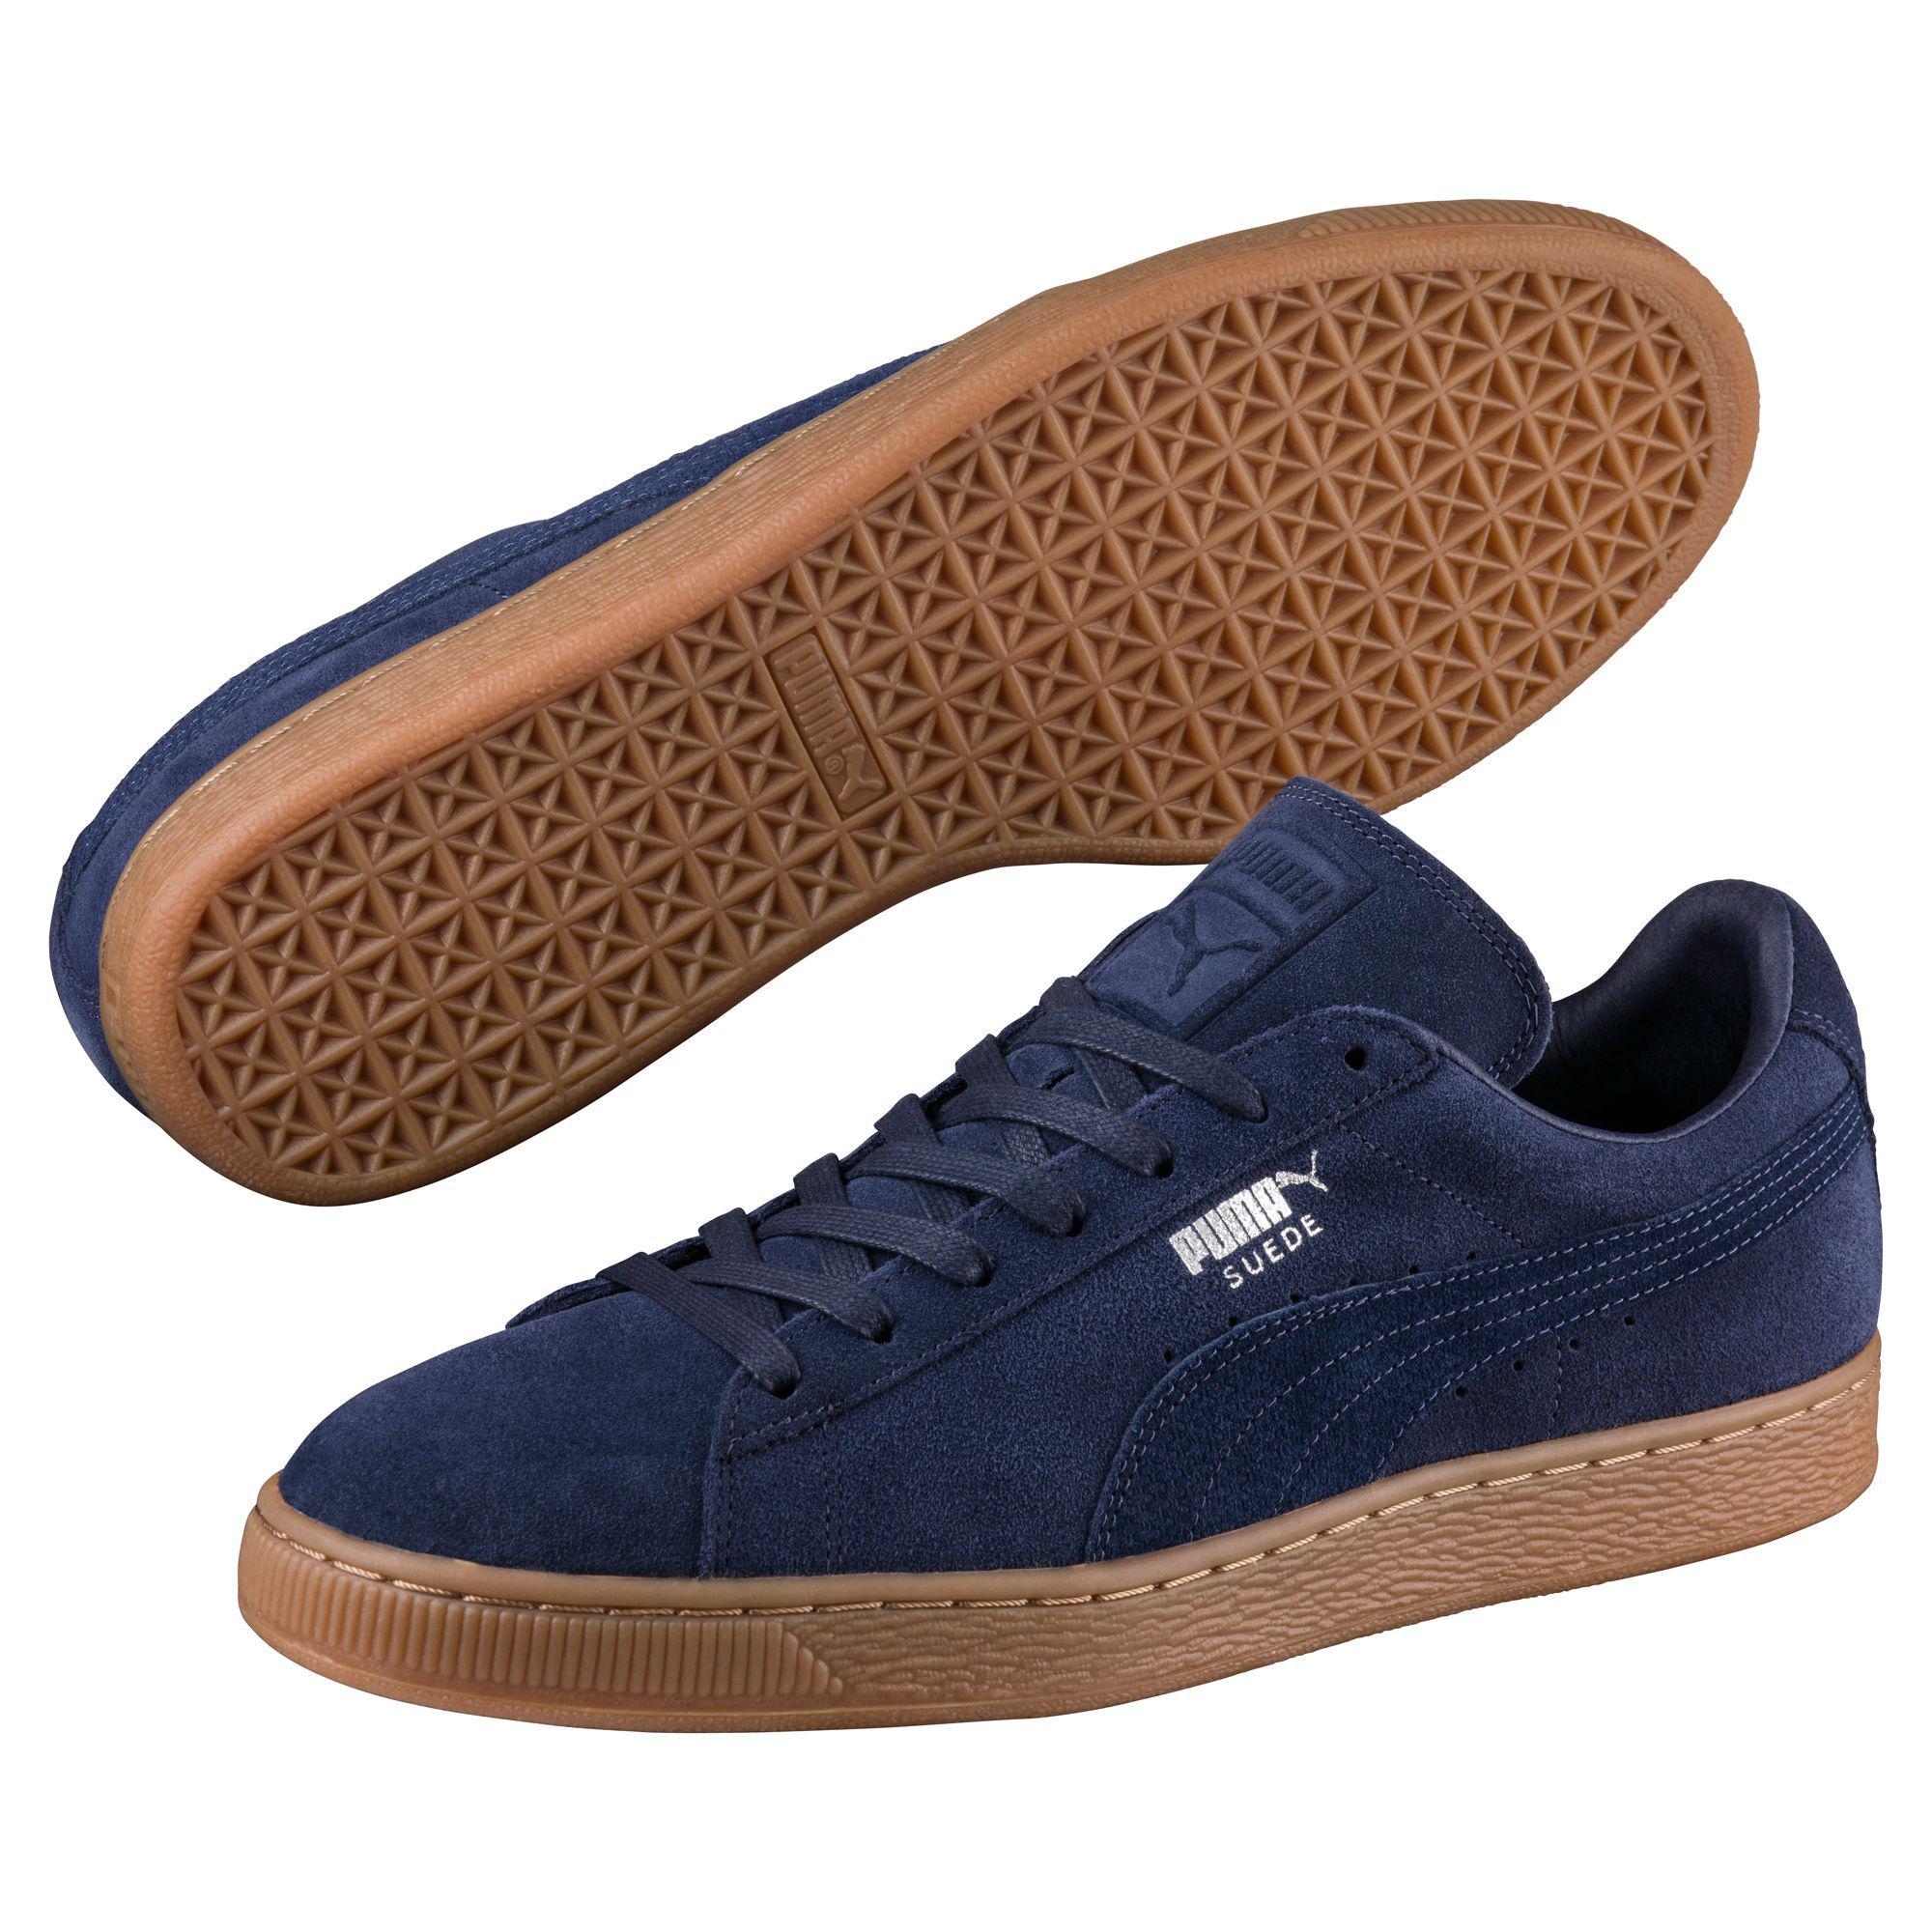 PUMA Suede Classic Citi Men's Sneakers in Blue for Men - Lyst